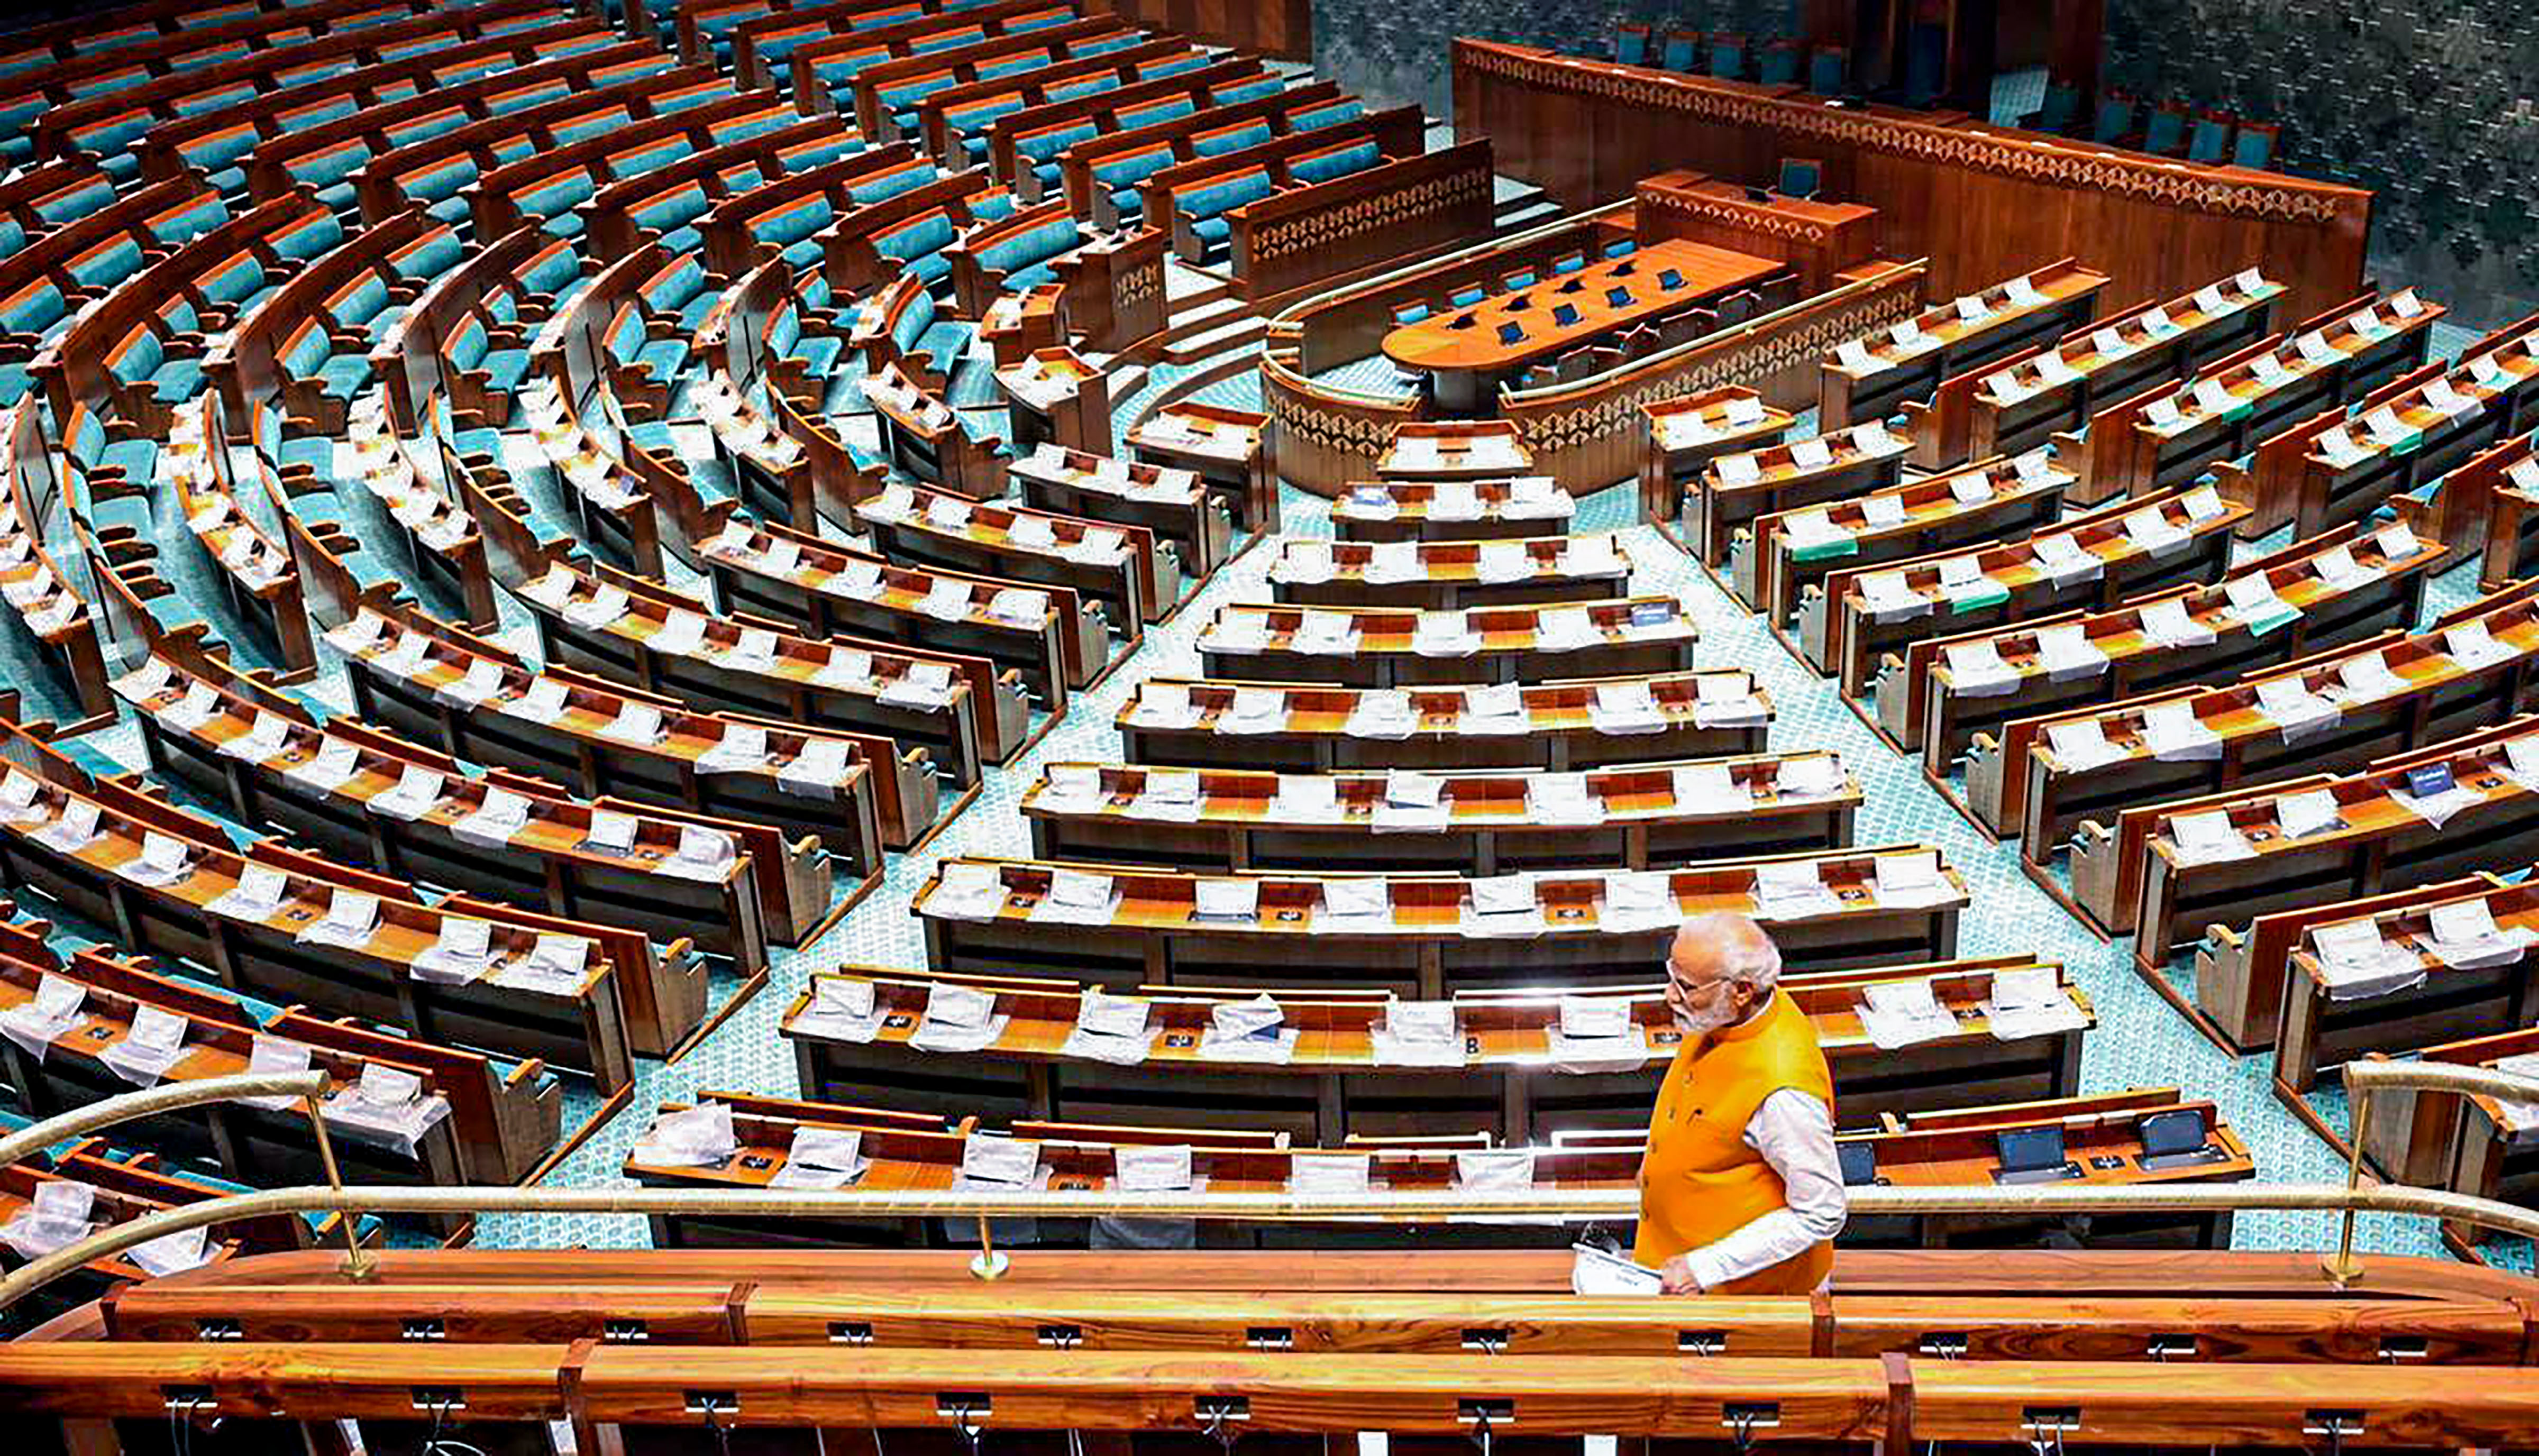 Peacock-Themed Lok Sabha, National Flower Lotus In Rajya Sabha, Here's How New Parliament Will Look Like